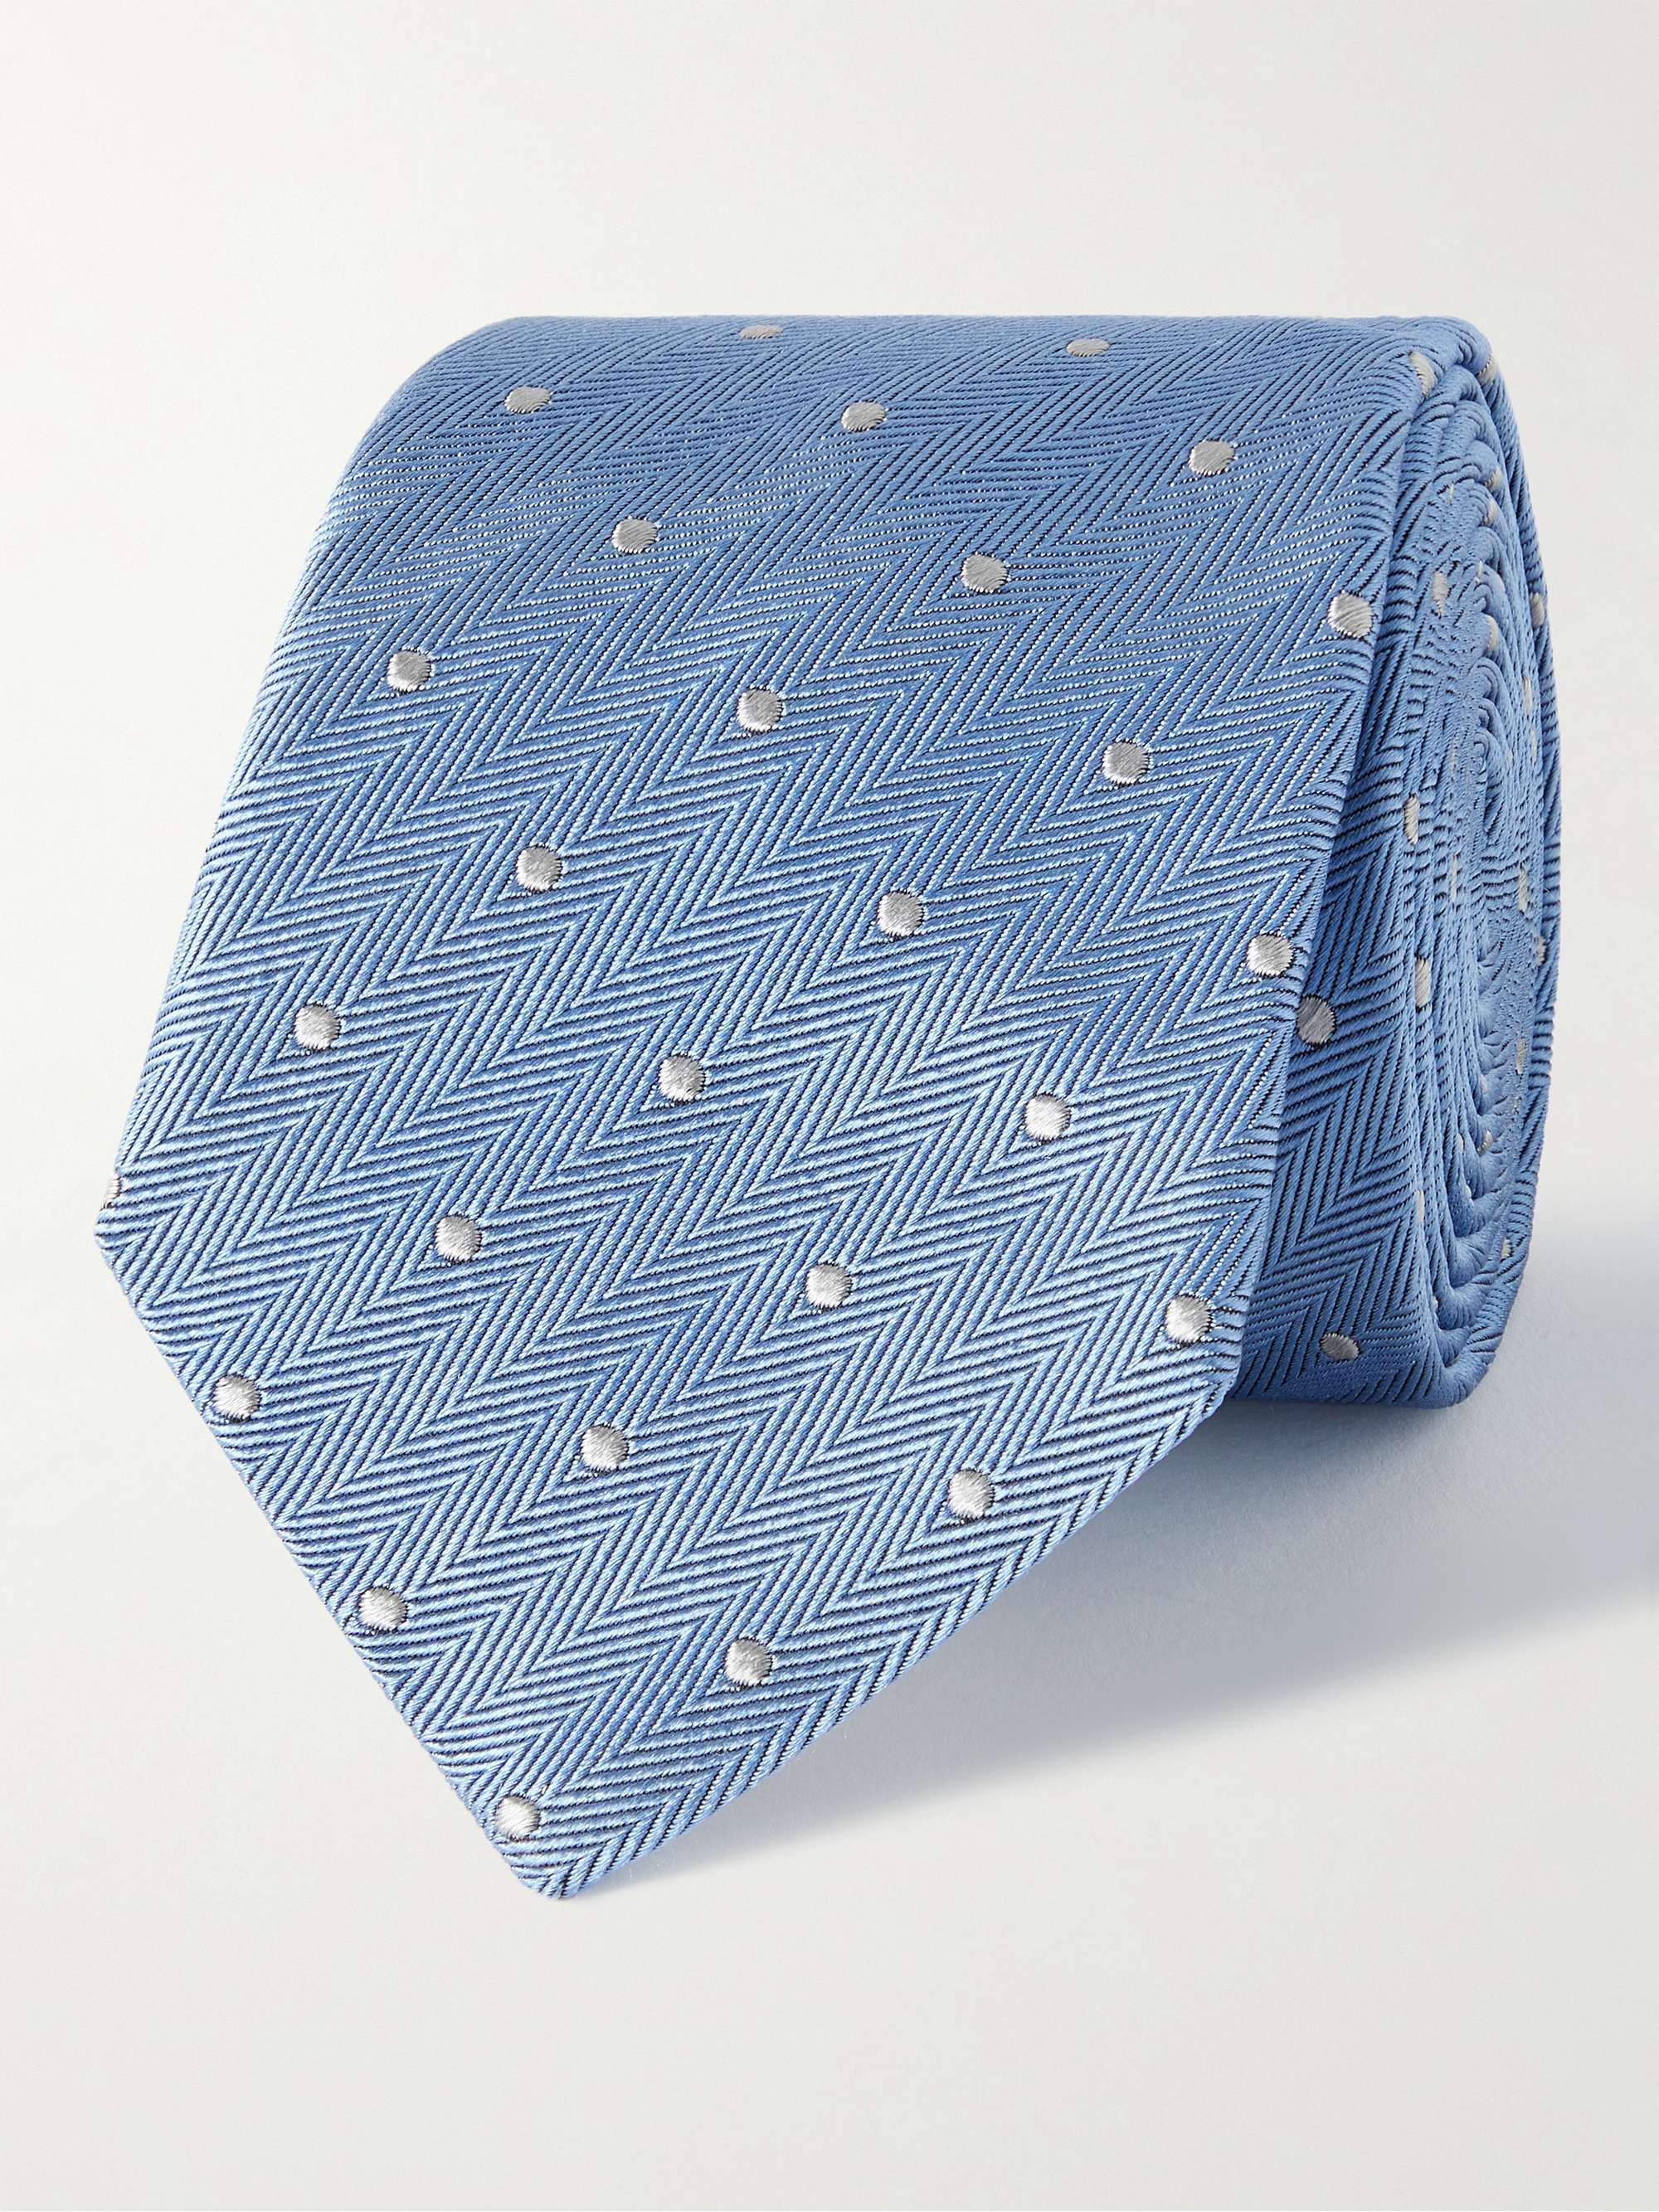 New Classic Solid Light Blue JACQUARD WOVEN 100% Silk Men's Tie Necktie 